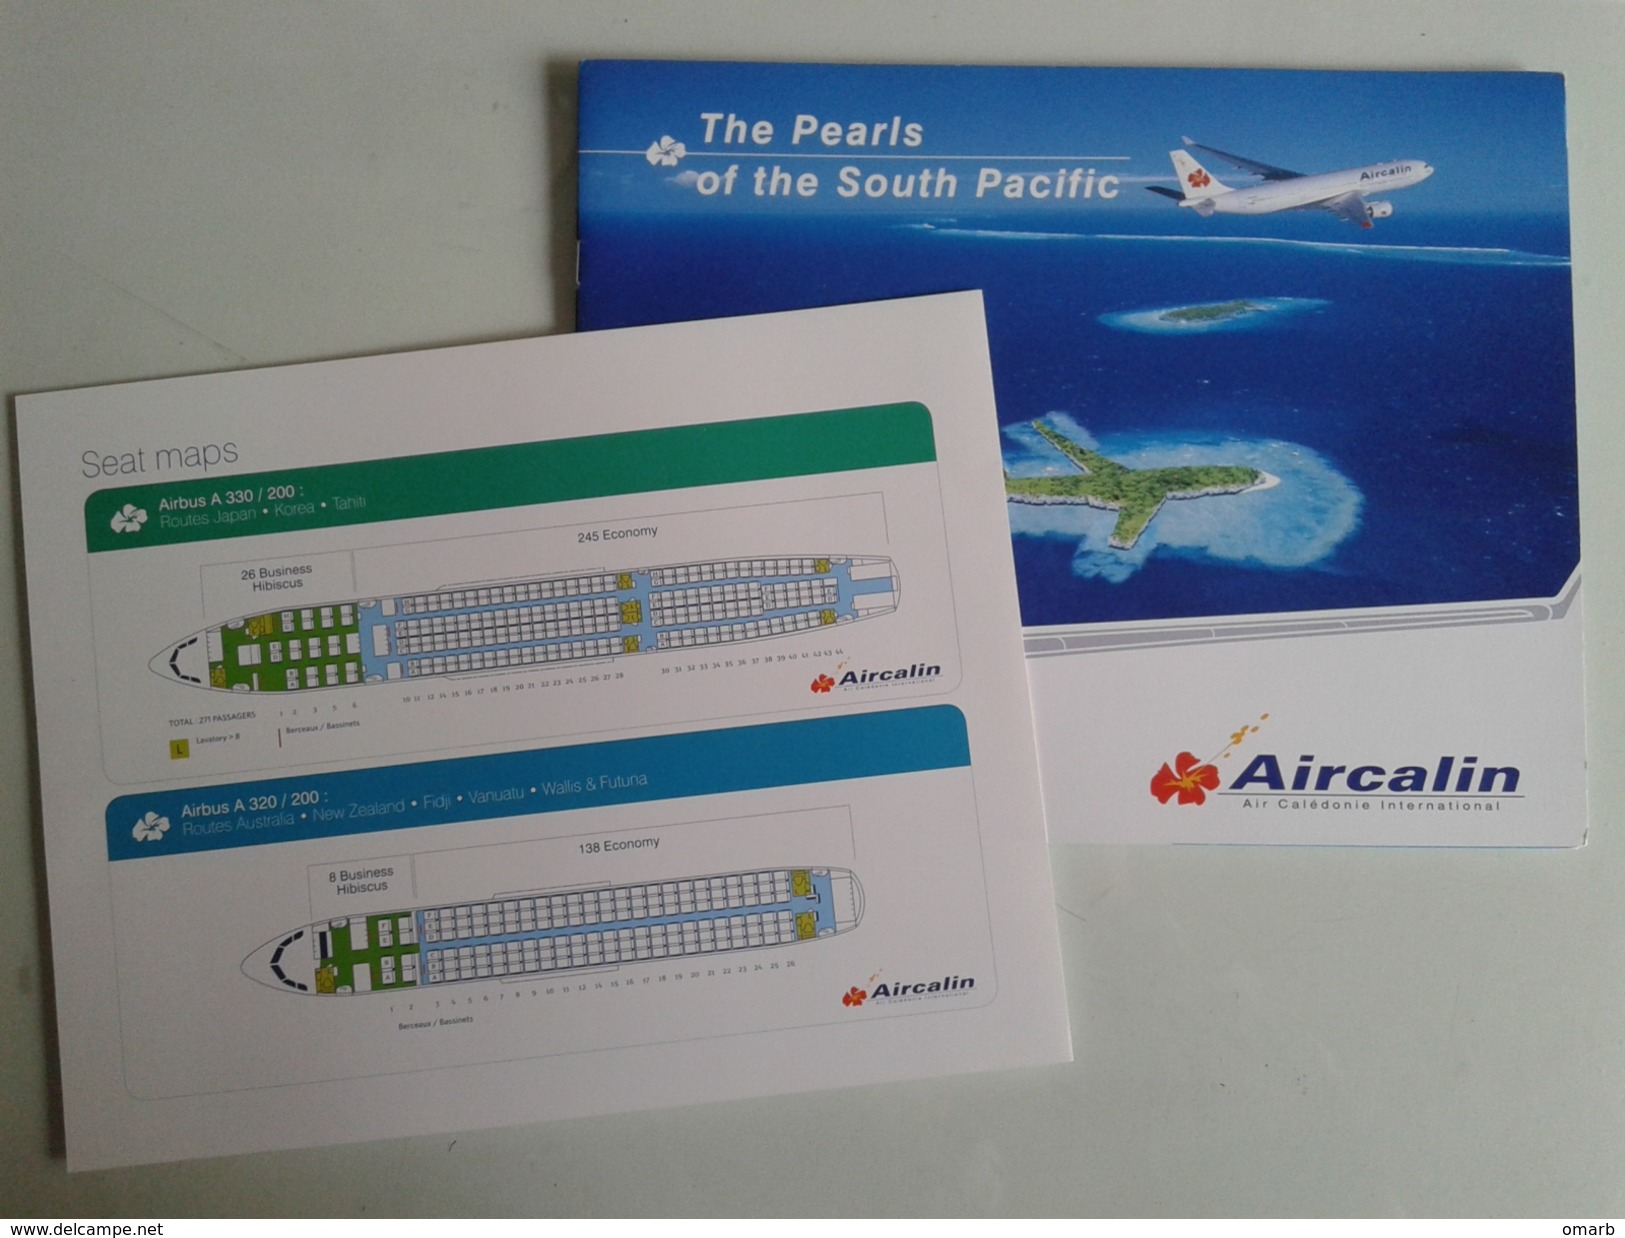 Alt982 Aircalin Air Caledonie International Airlines Flights Airbus Pacific Japan Tahiti Australia Fiji Vanuatu Plane - Giveaways